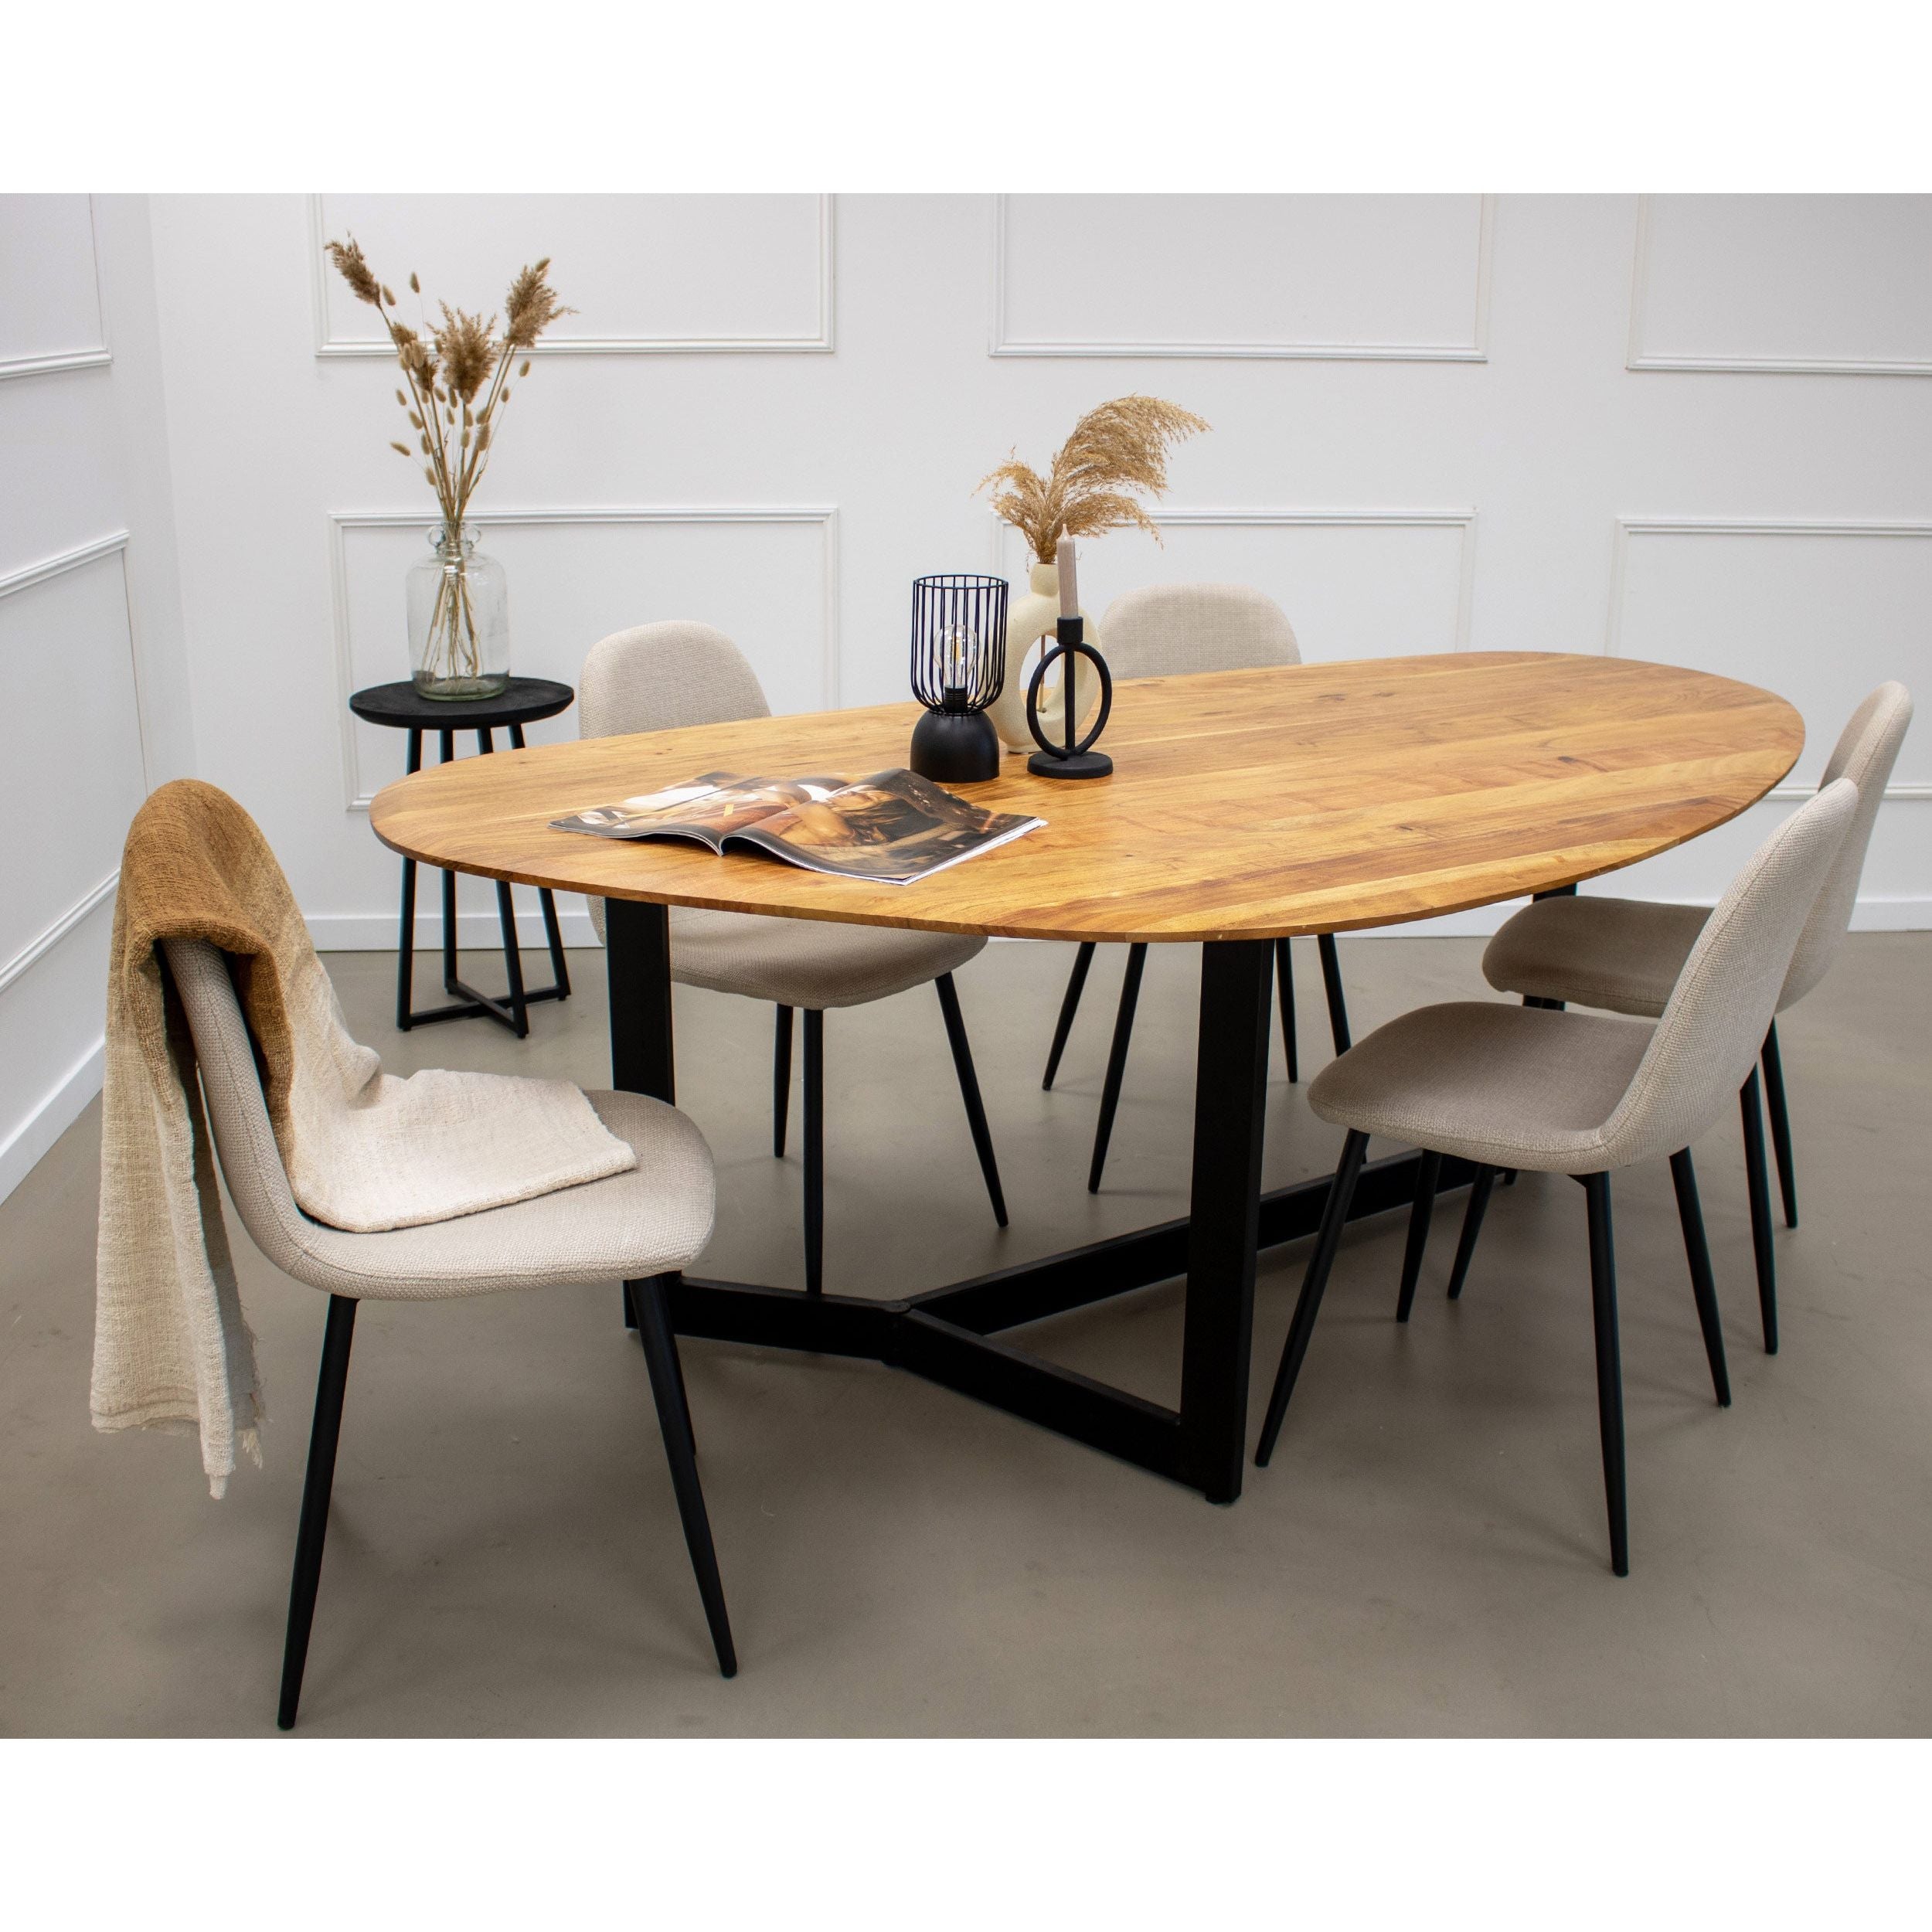 Kick dining table Sven - 210